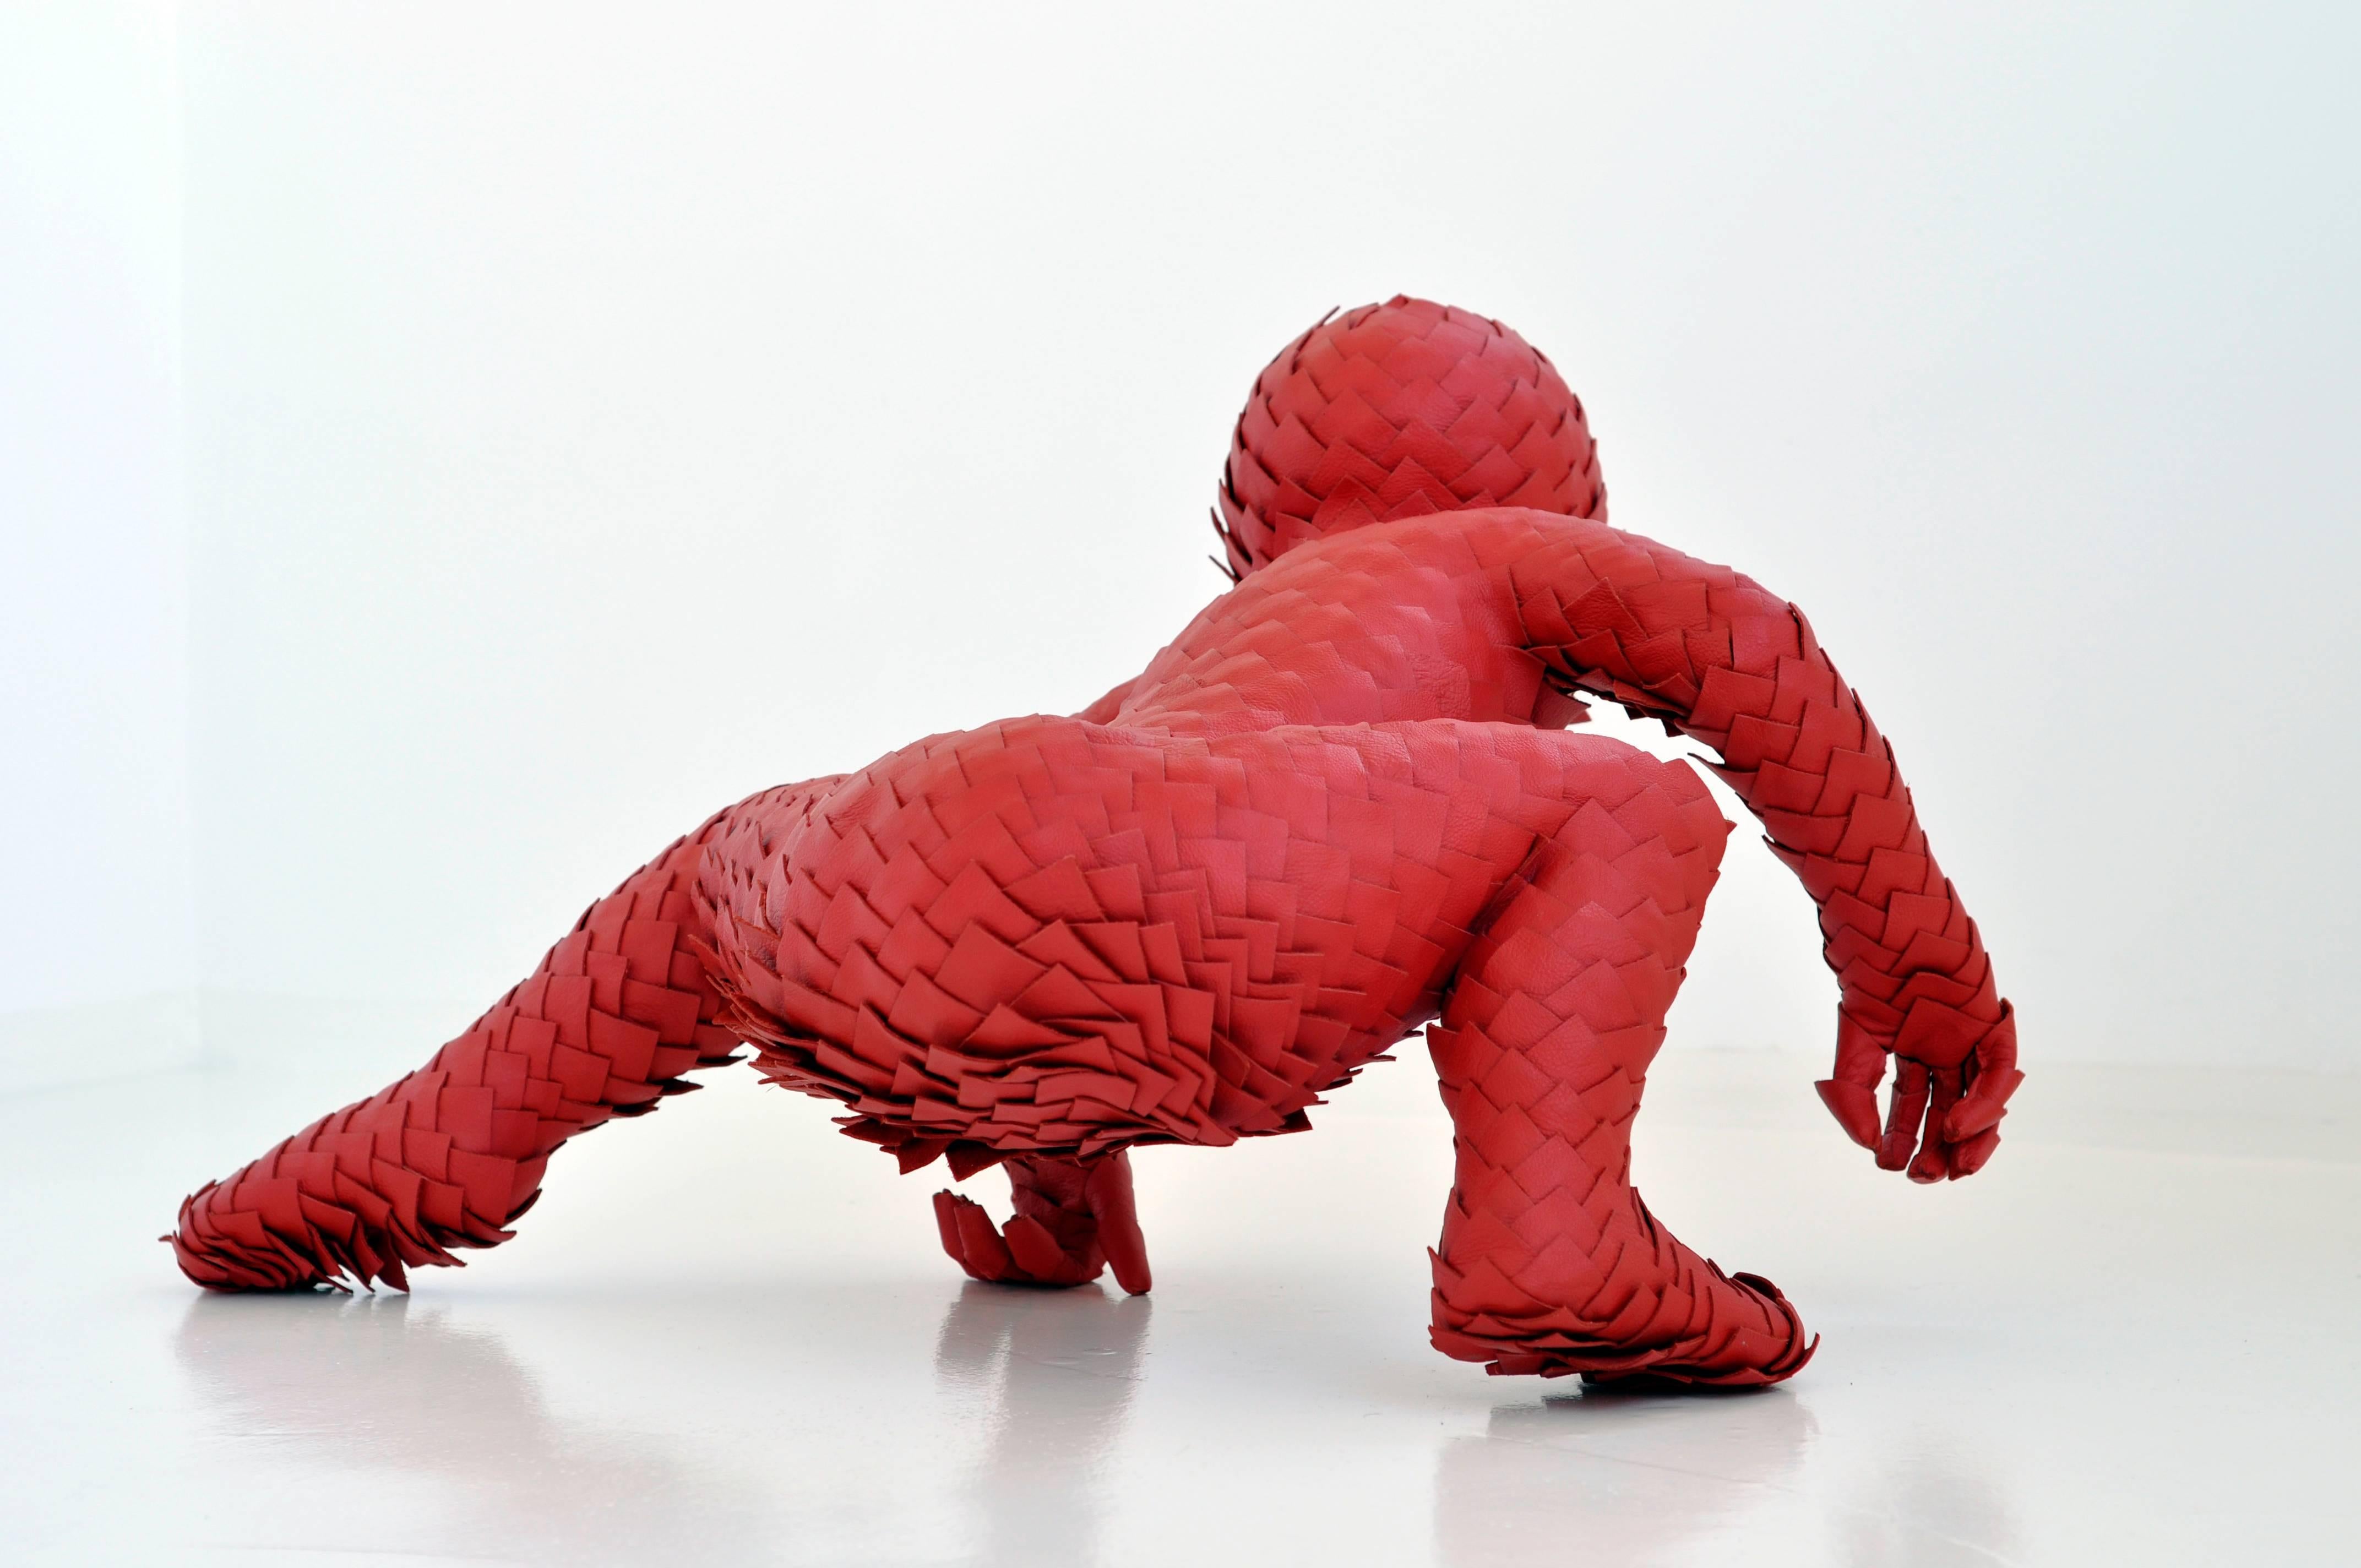 Red leather sculpture. Dutch art. Hand crafted, unique sculpture. - Sculpture by Sabi van Hemert